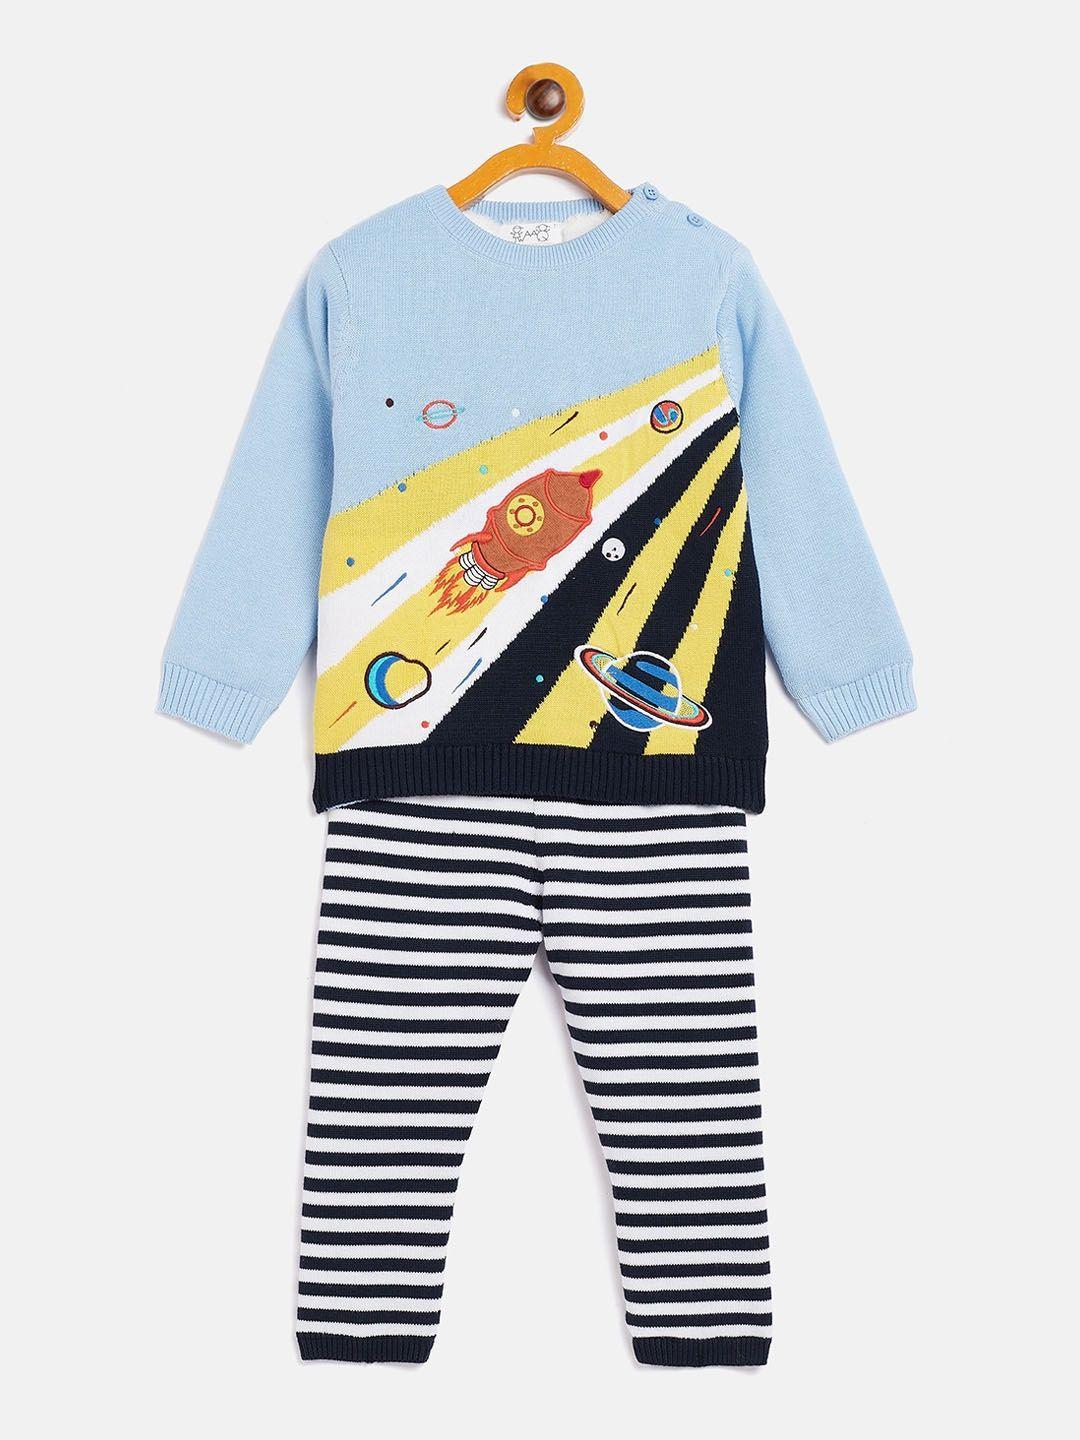 jwaaq unisex kids multicoloured printed top with pyjamas